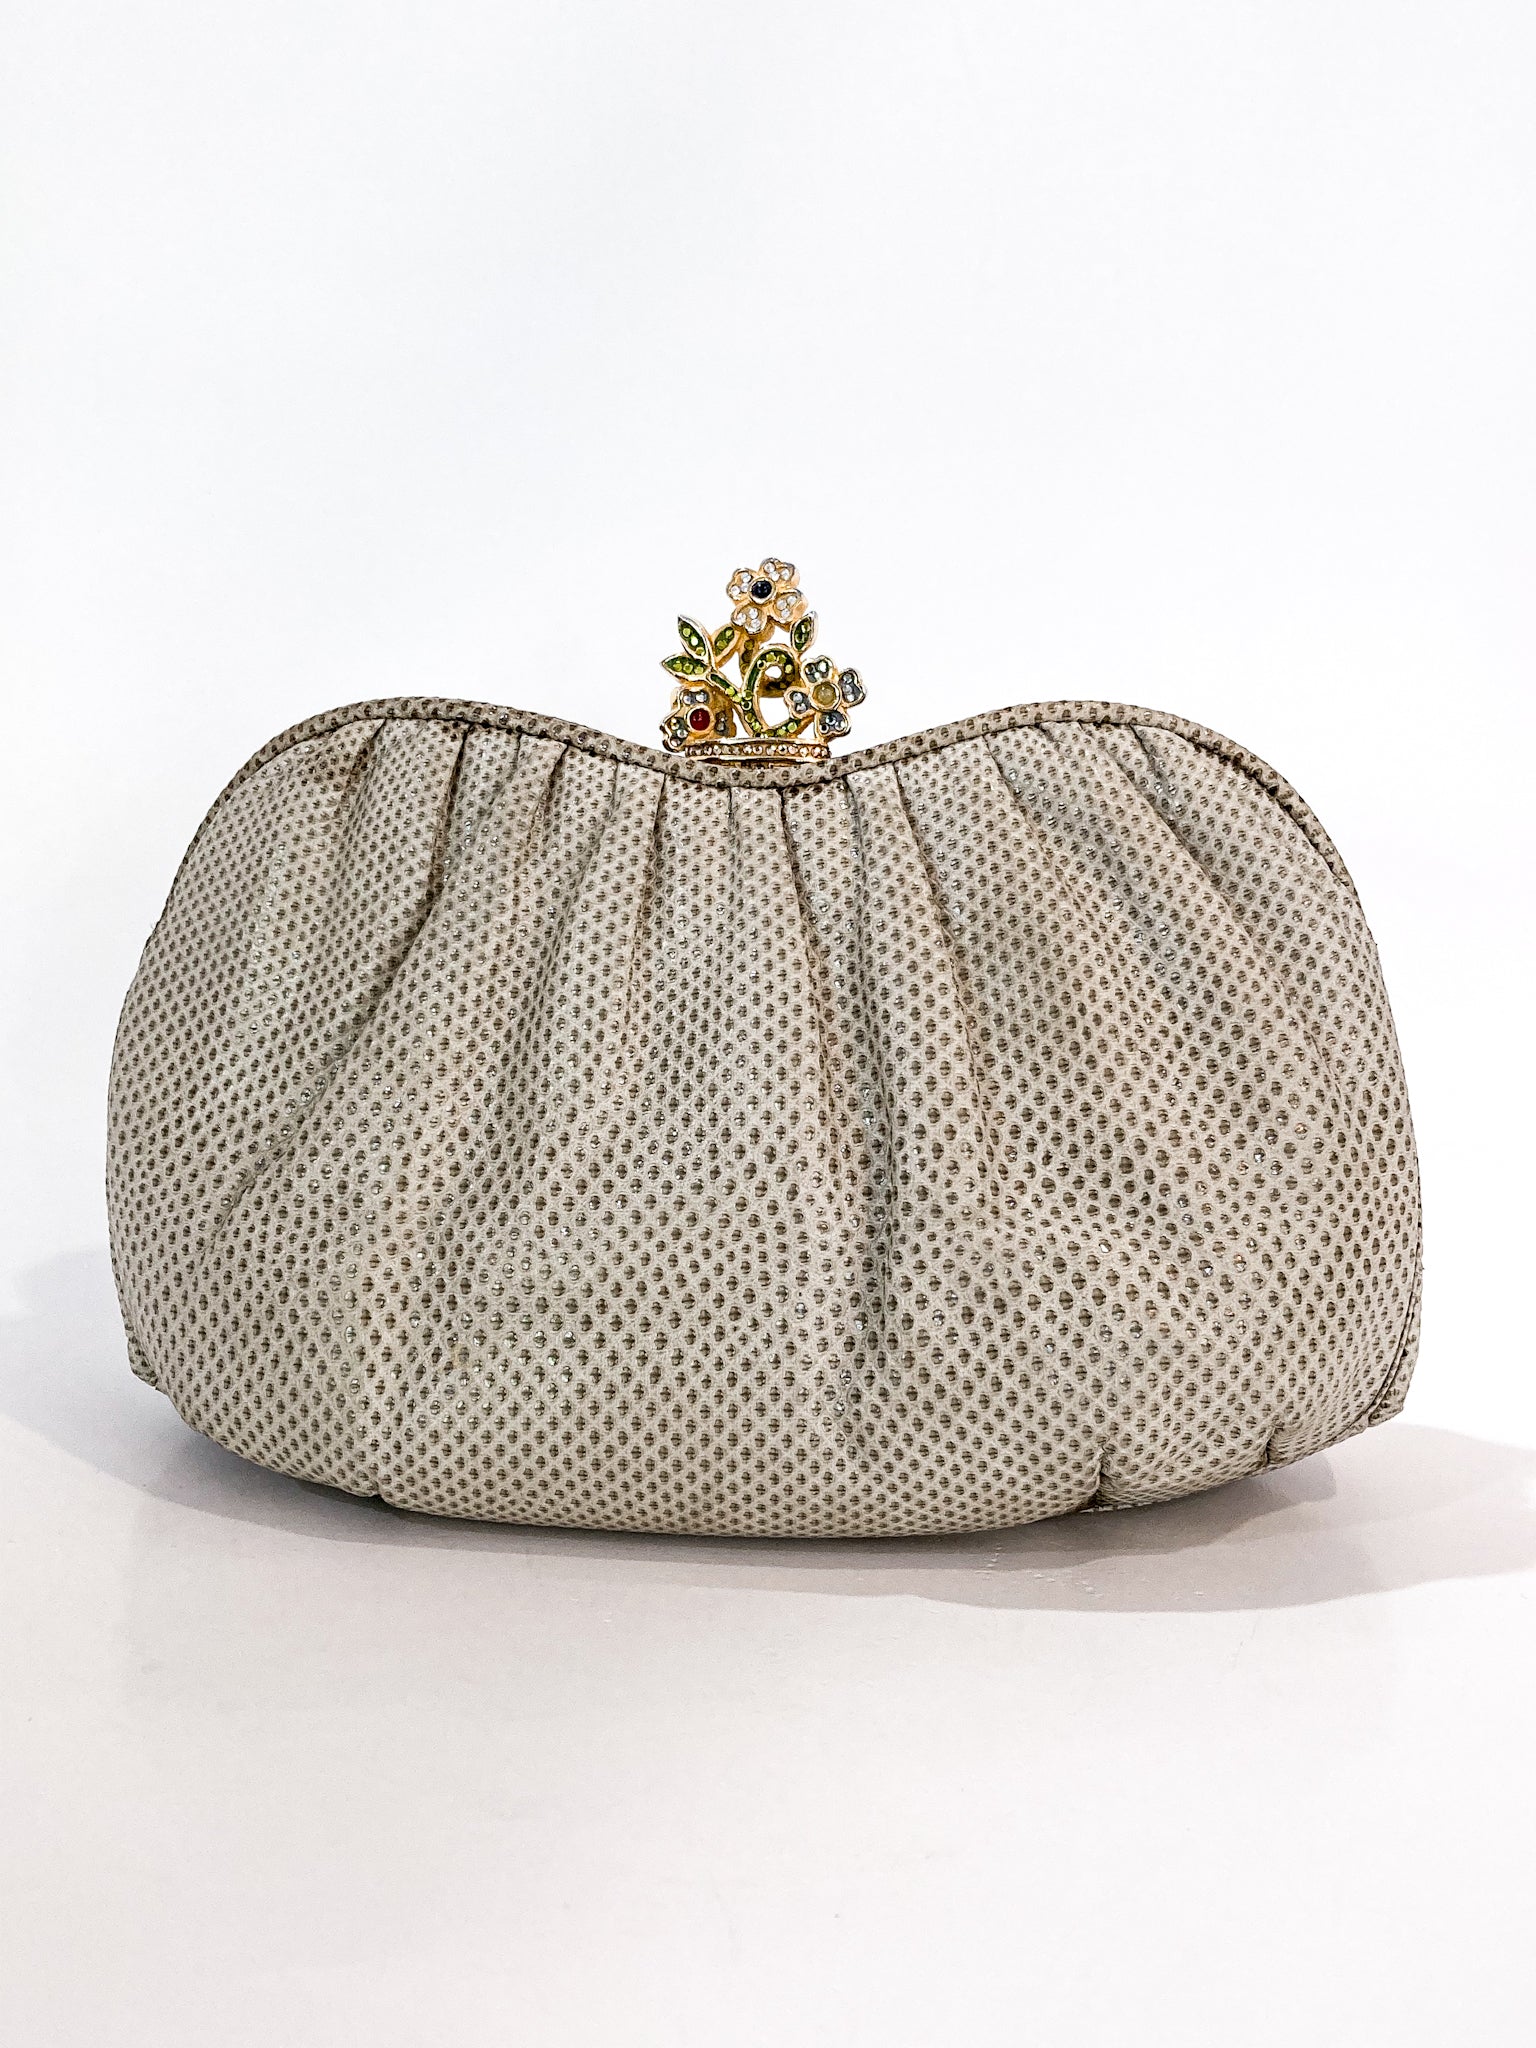 SKYCARPER Women's Vintage Floral Beaded Clutch Bag